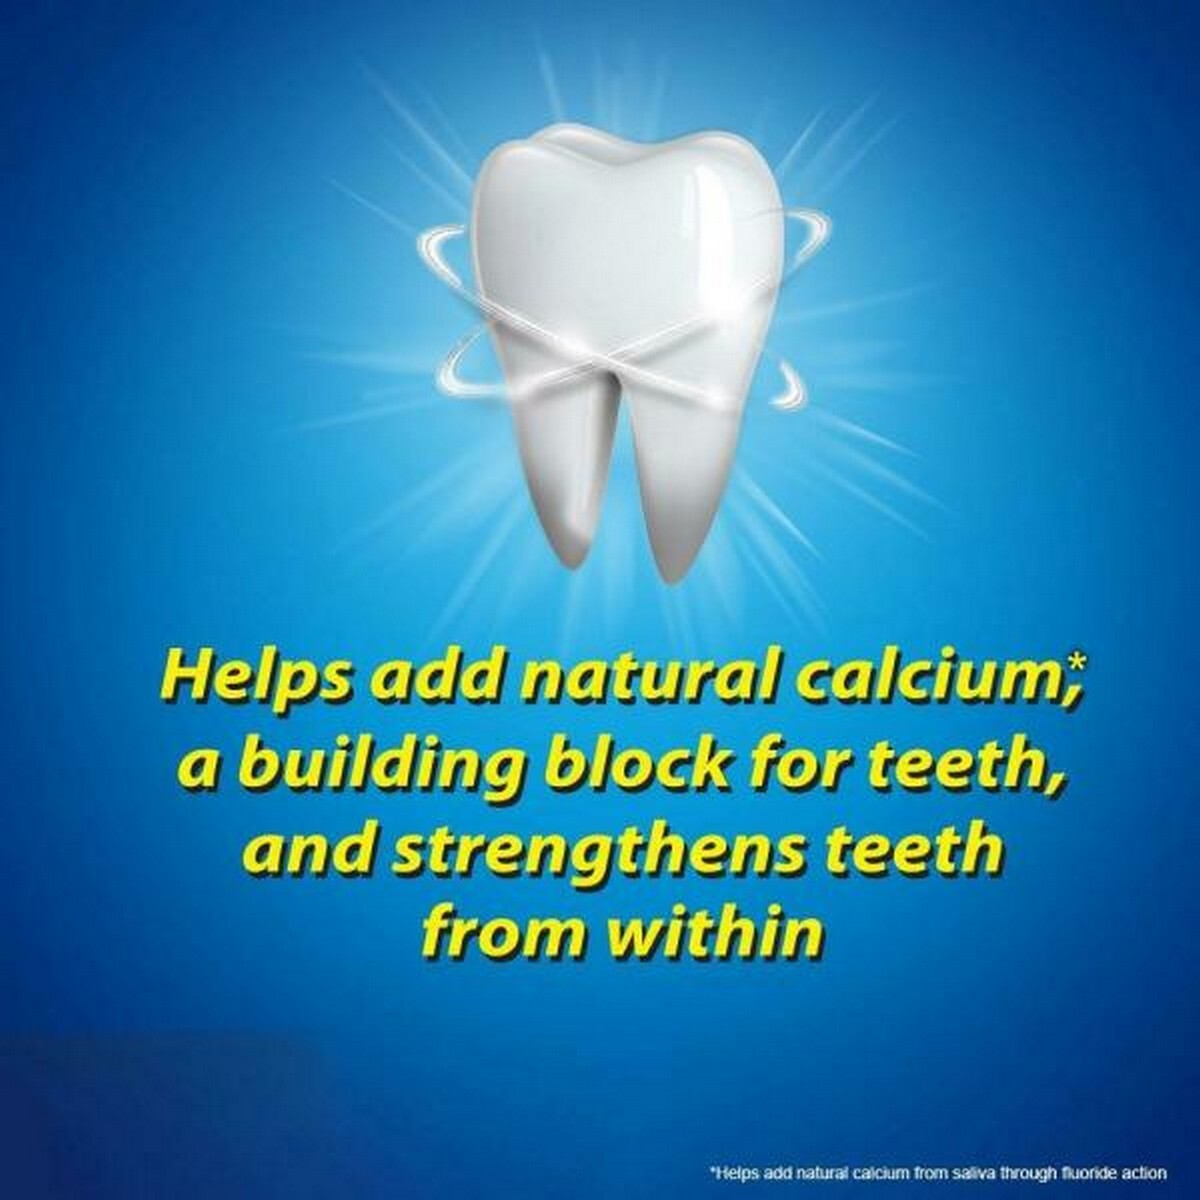 Colgate Tooth Paste Dental Cream 500g